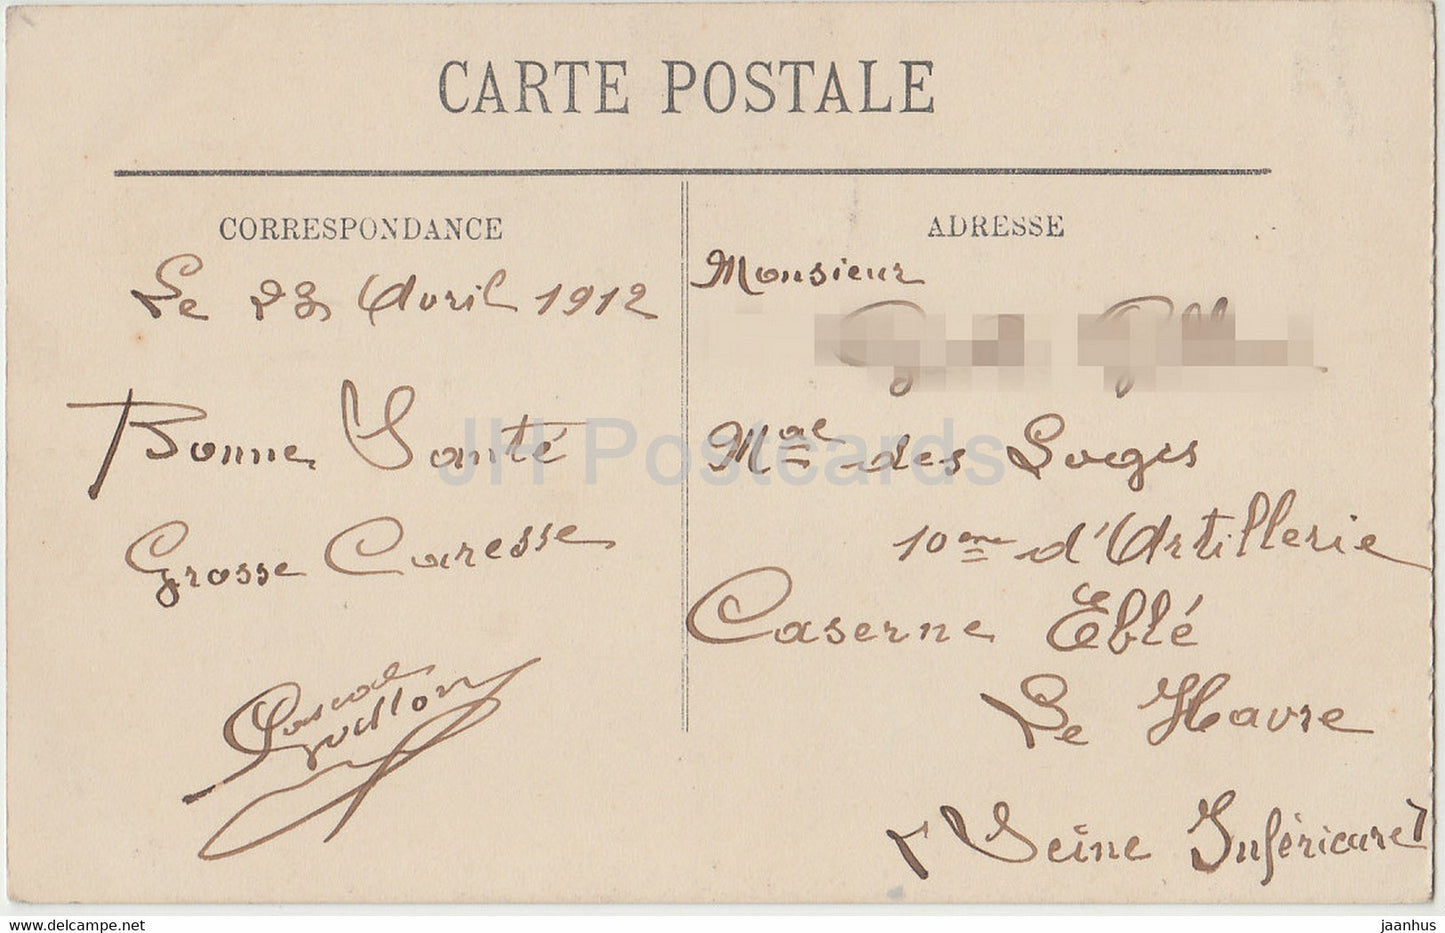 Arles - Le Musee - Museum - 38 - alte Postkarte - 1912 - Frankreich - gebraucht